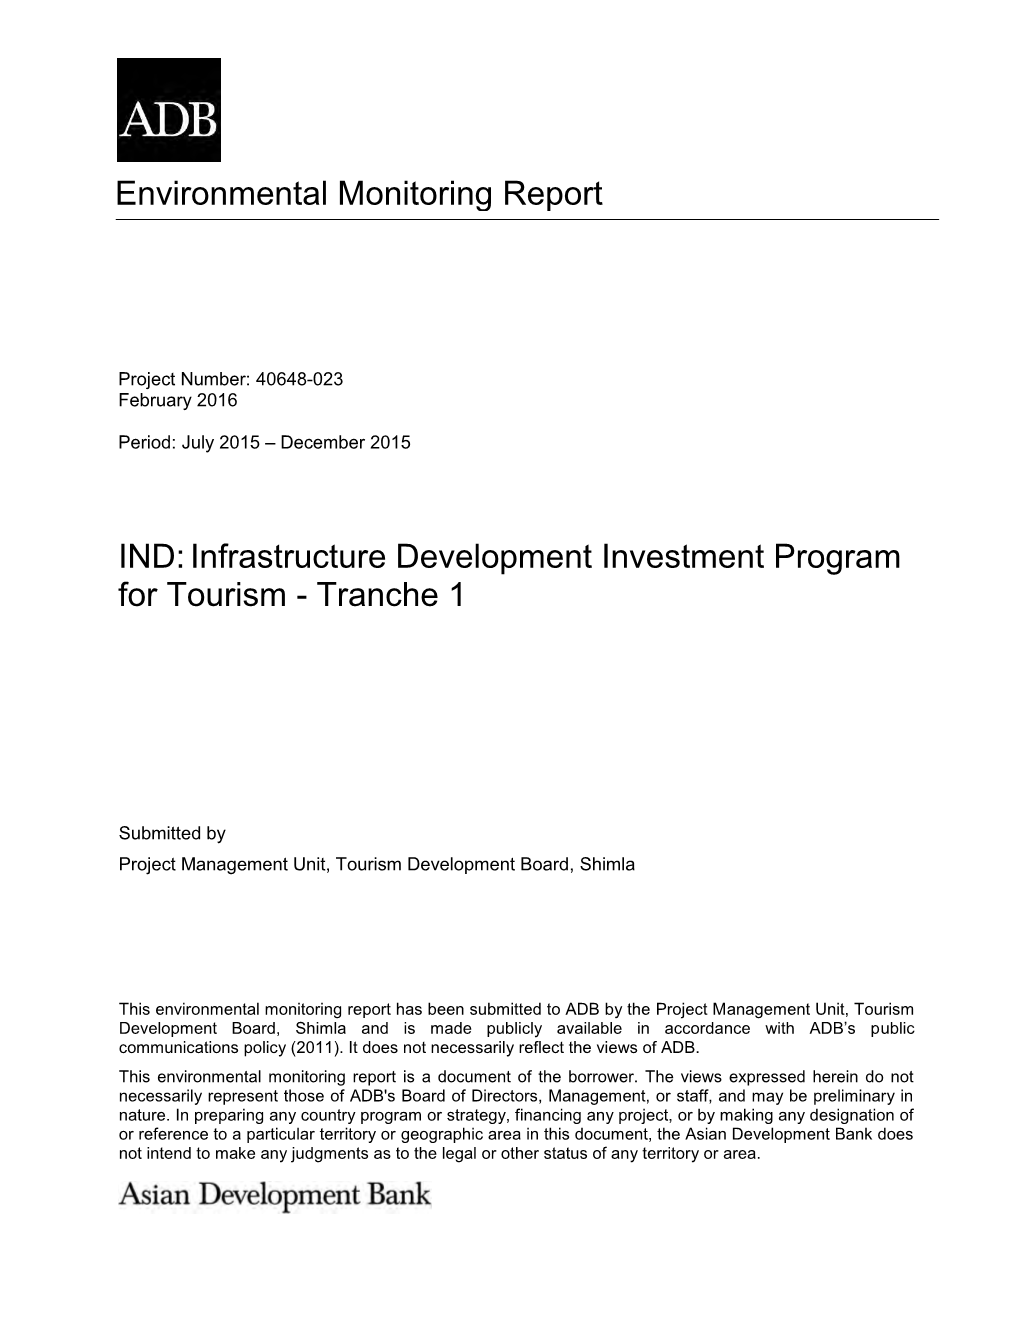 (Himachal Pradesh): Environmental Monitoring Report (July